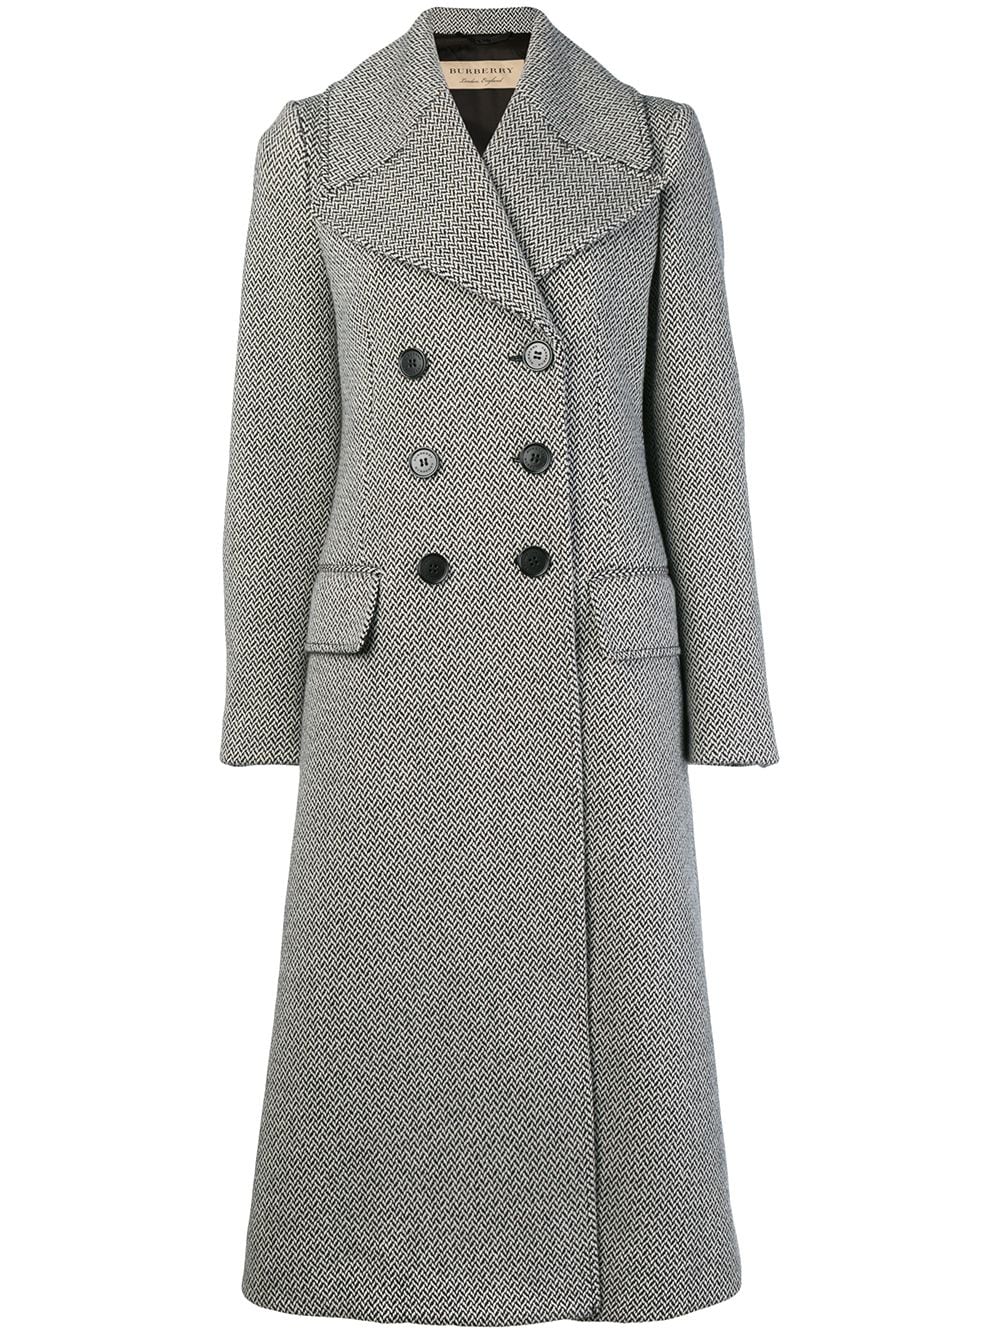 burberry herringbone wool blend tailored coat